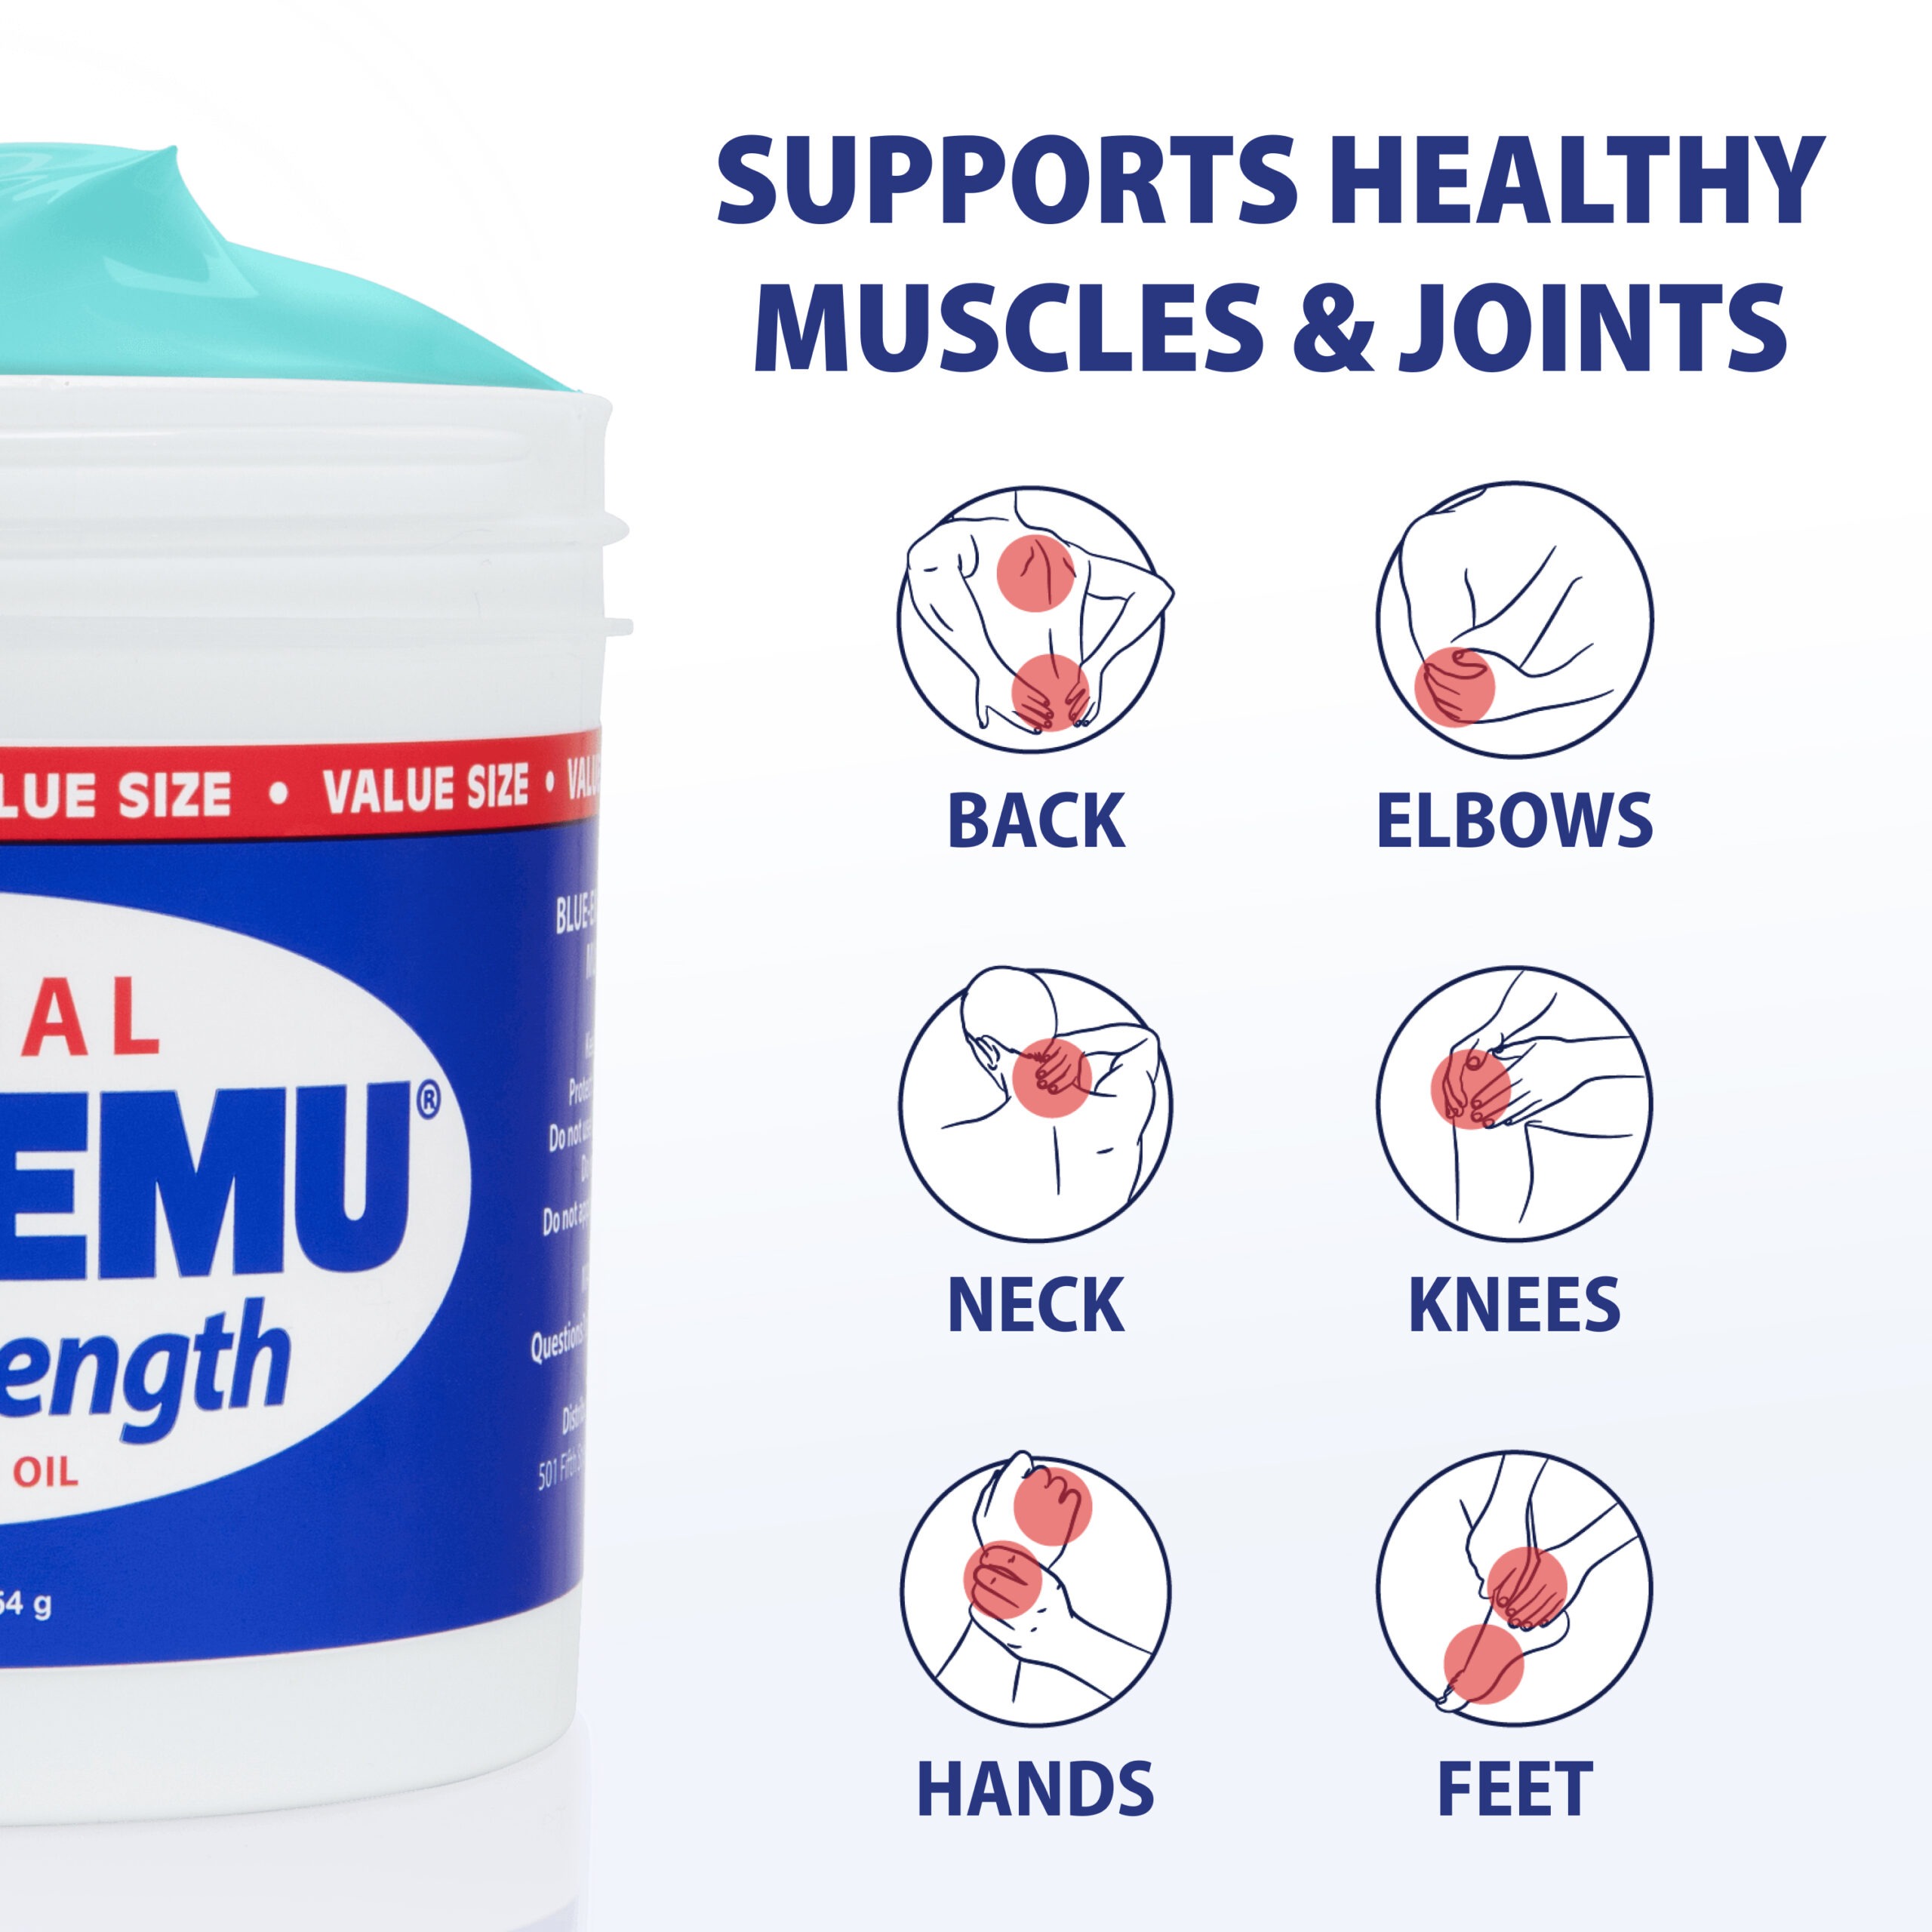 Blue-Emu Original Super Strength Muscle and Joint Cream, 12 oz Value Size,  2 Jar Special – Blue-Emu